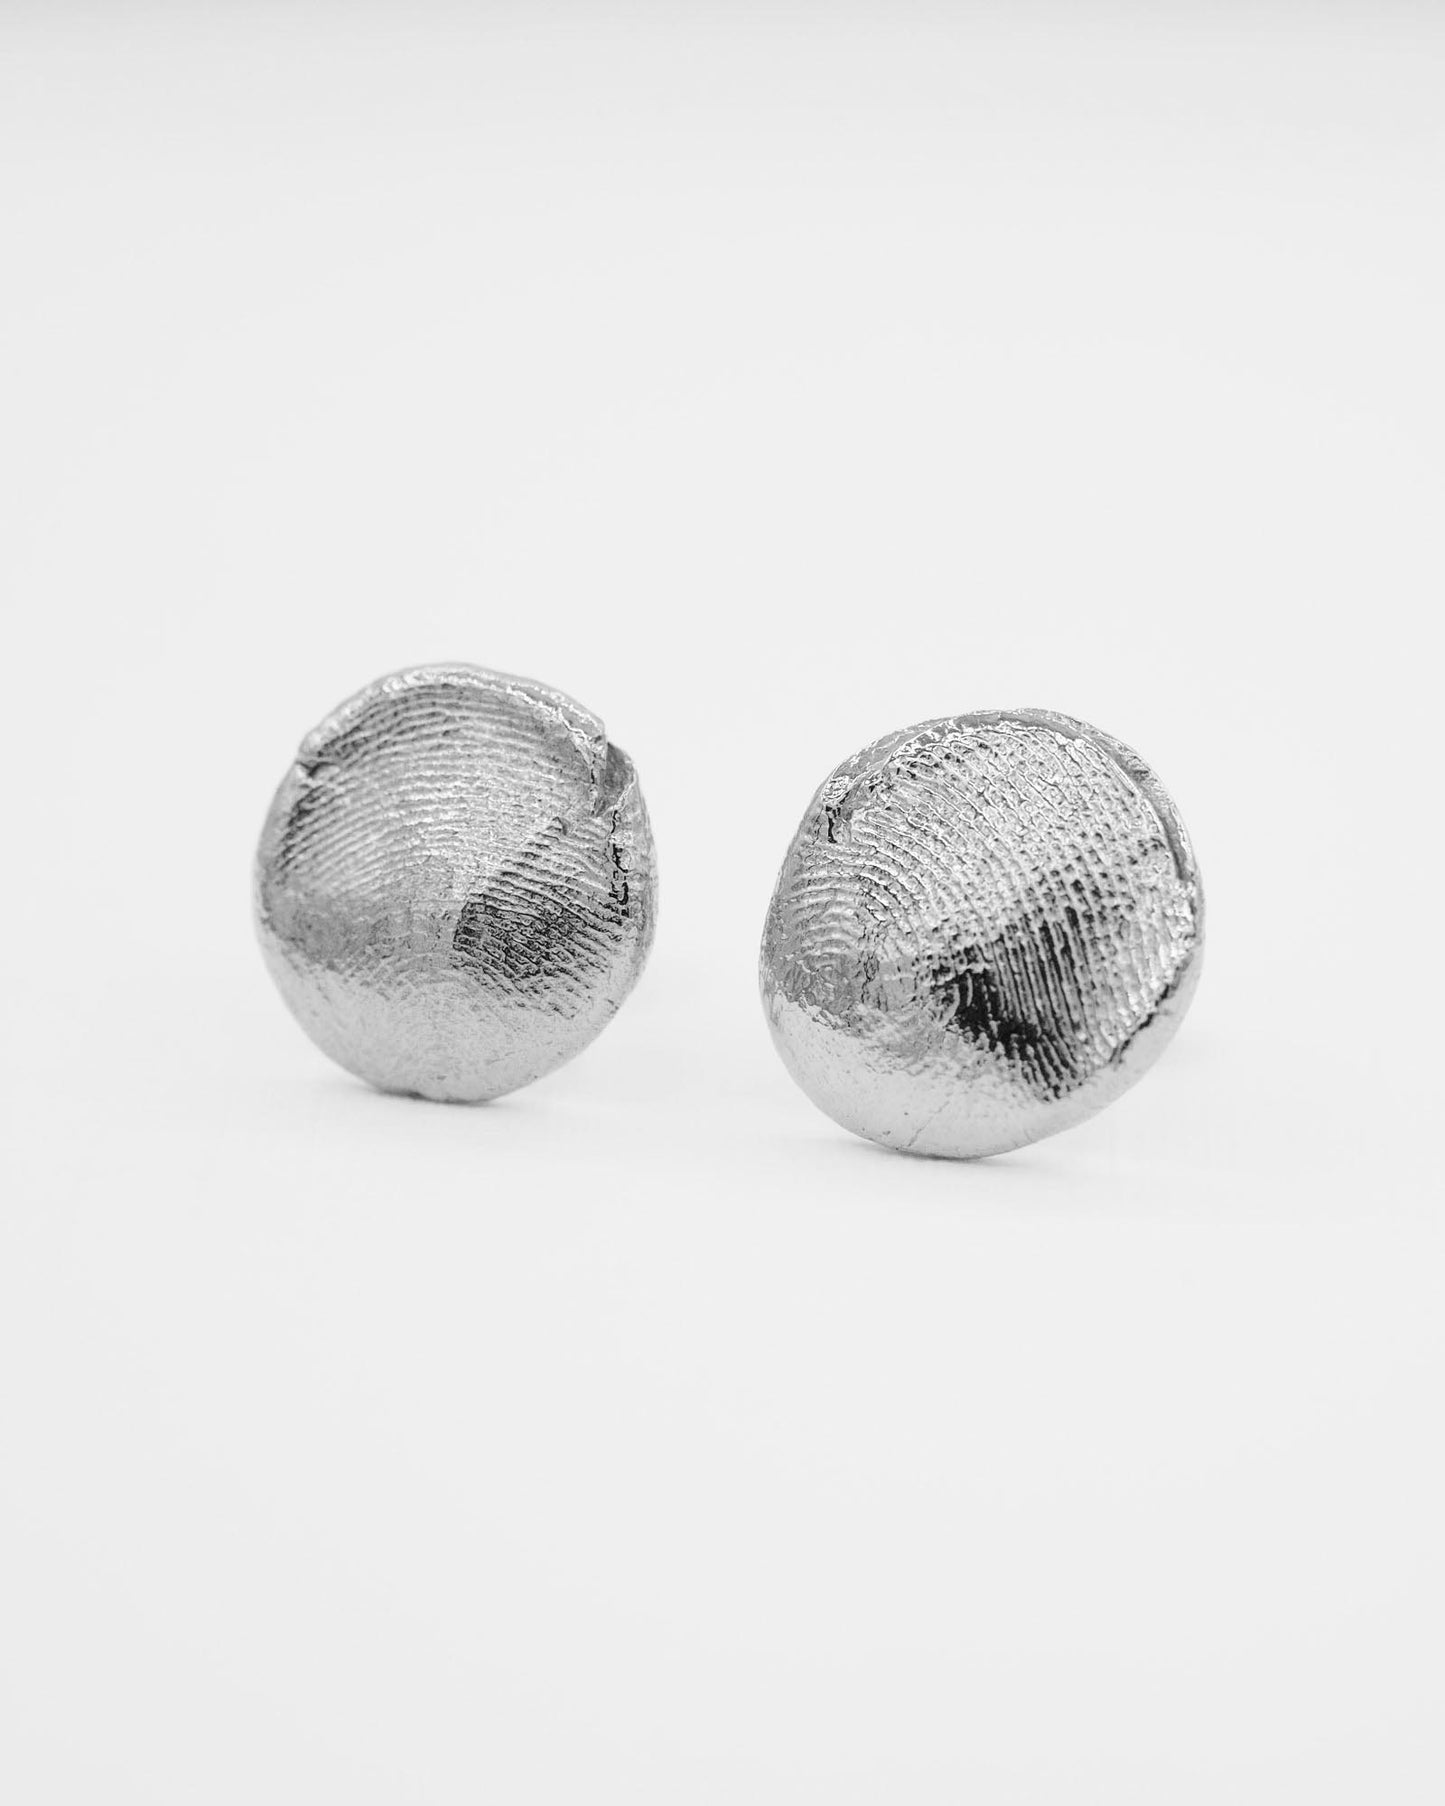 Baby Fingerprints Earrings in sterling silver by Matanai Jewelry